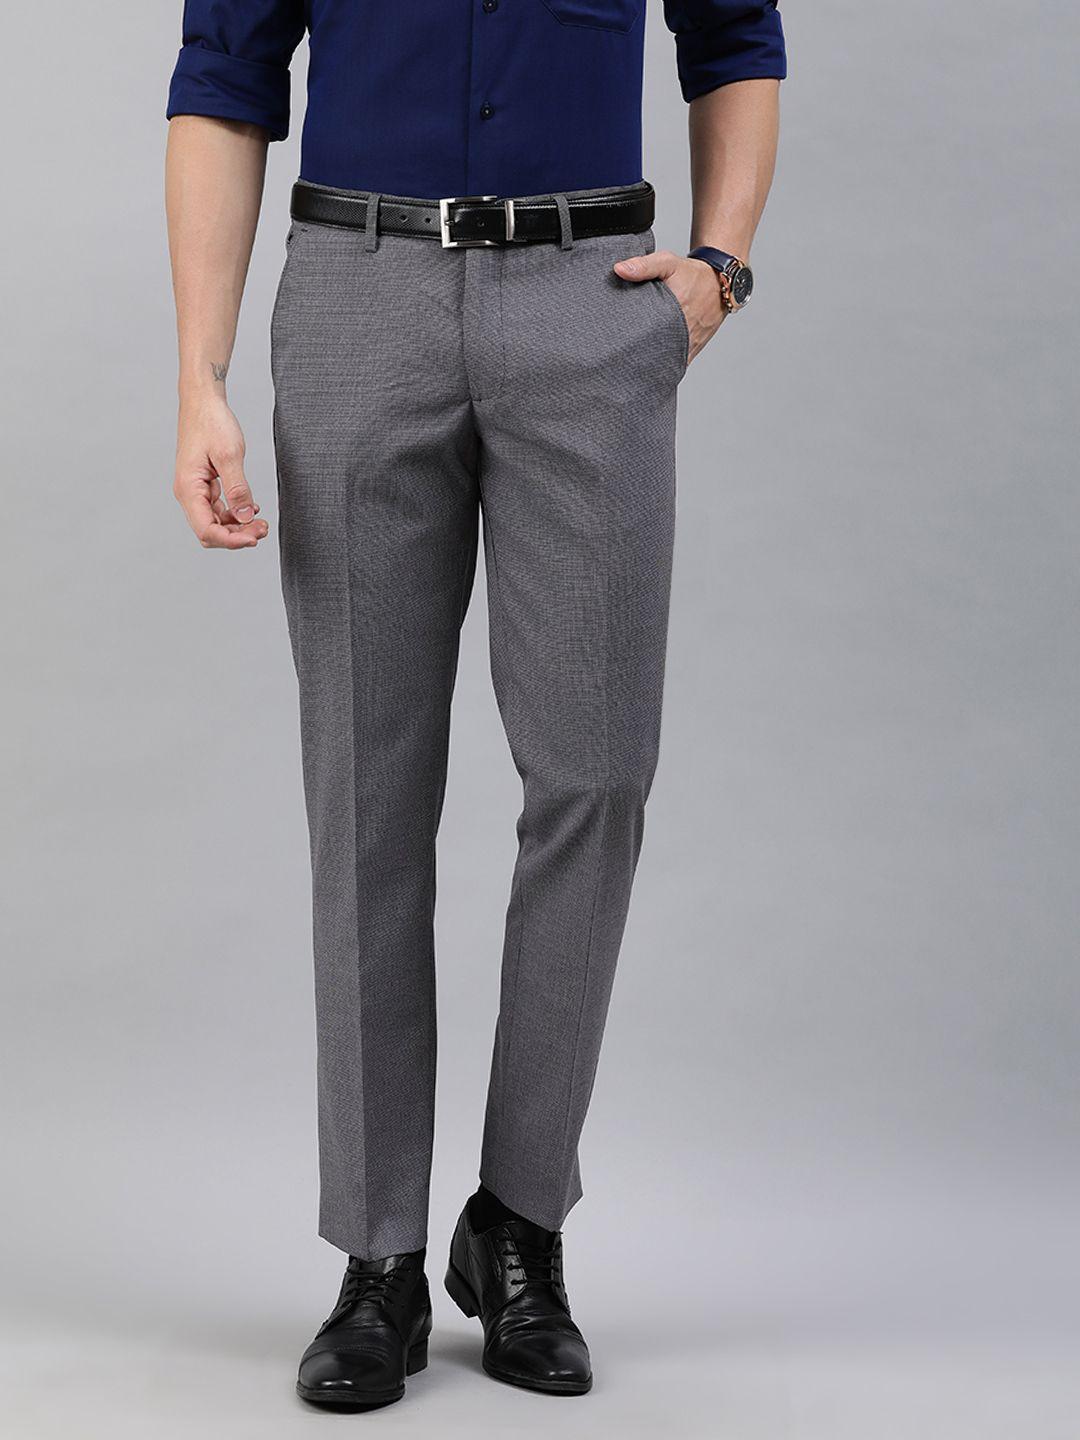 louis philippe men grey & black slim fit printed formal trousers